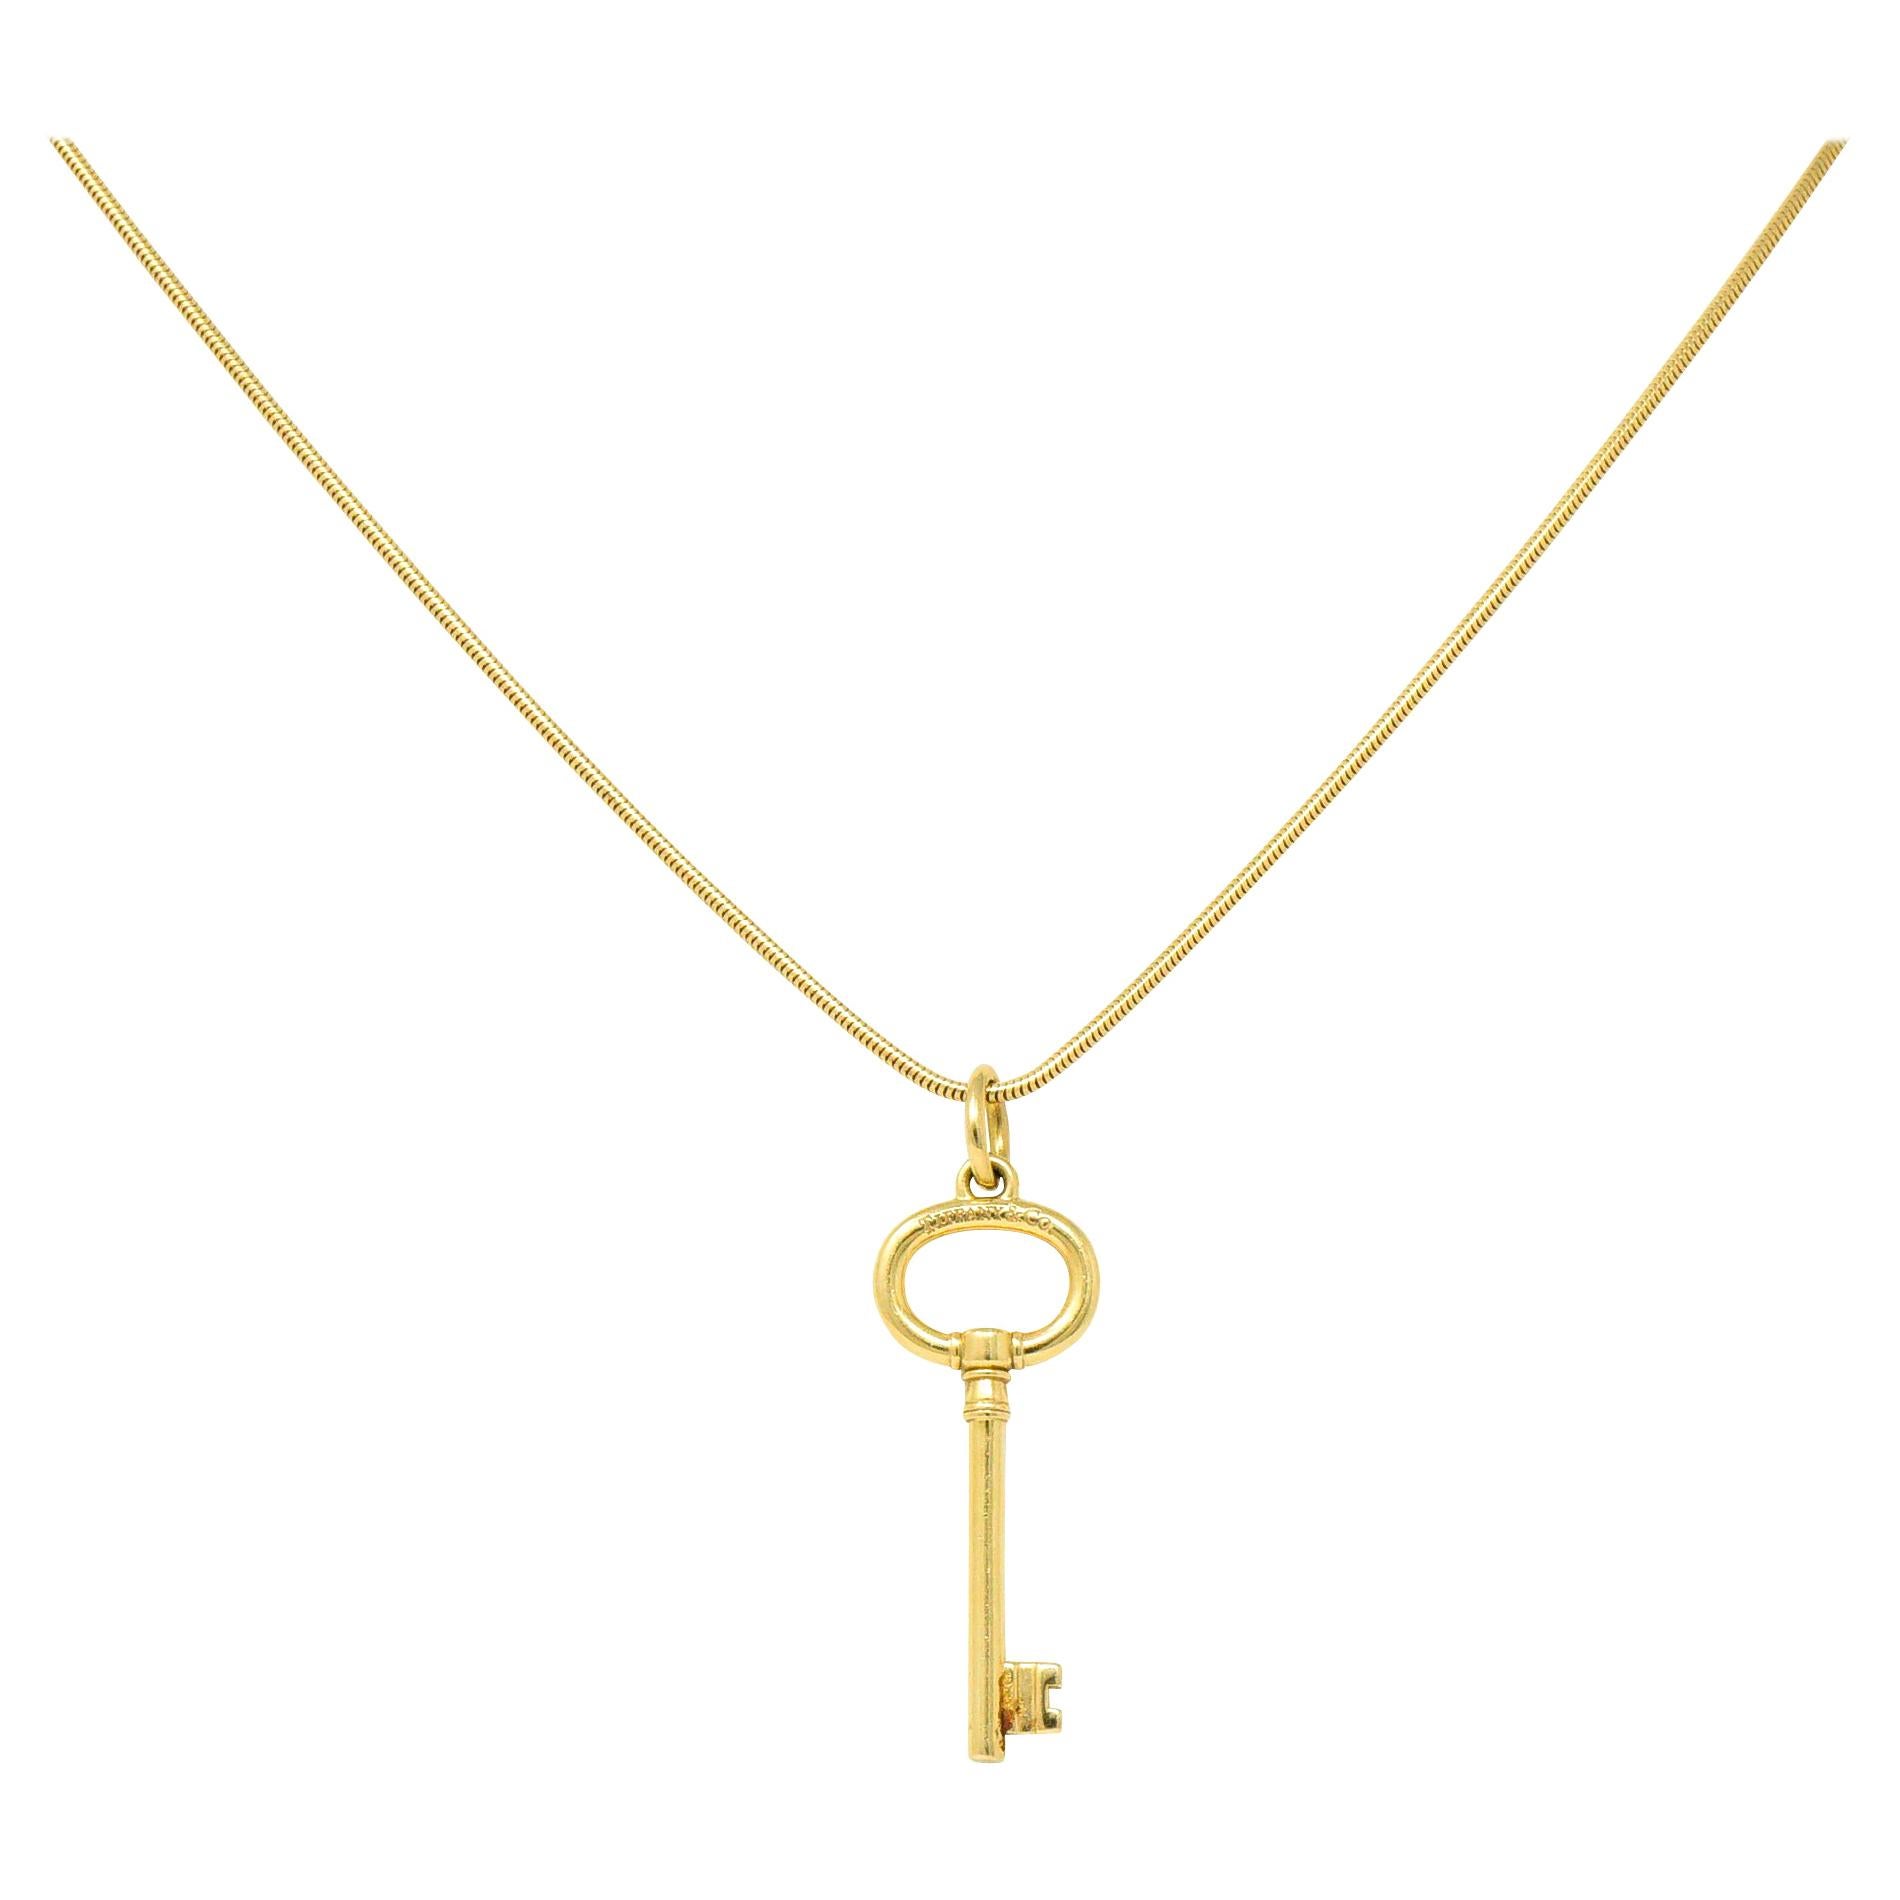 Tiffany & Co. Contemporary 18 Karat Gold Key Pendant Necklace